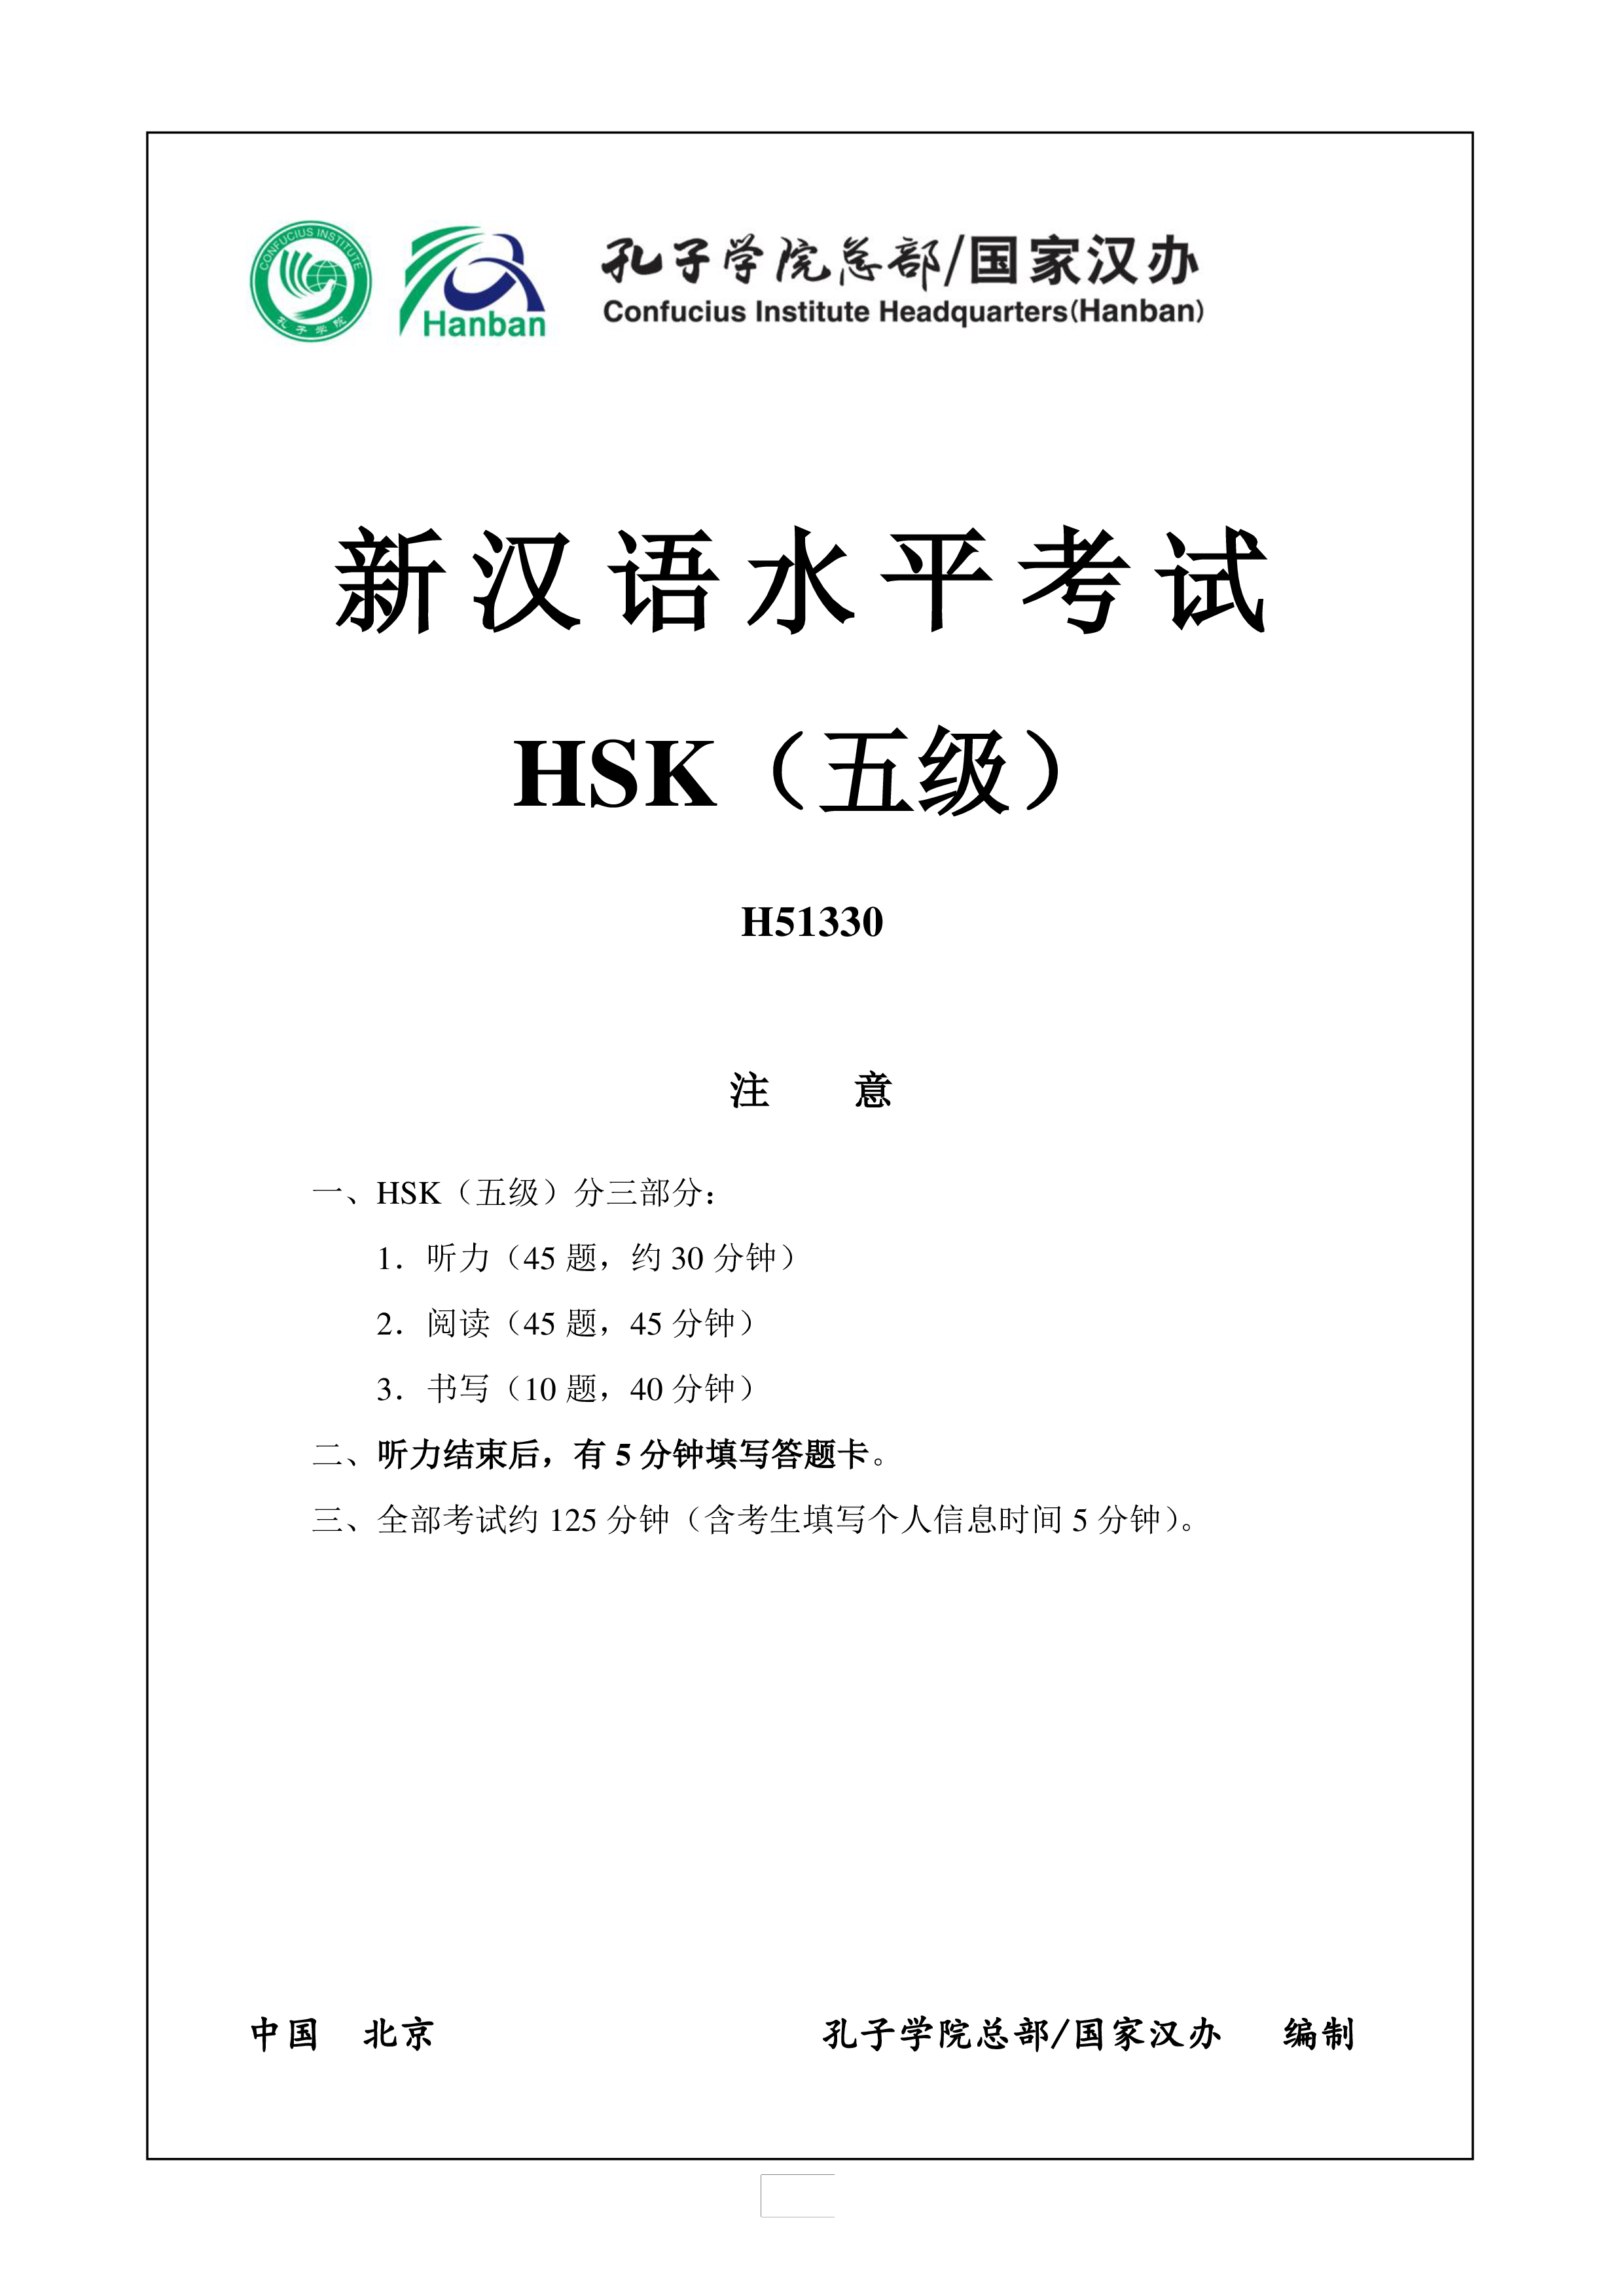 hsk5 chinese exam, incl audio and answer # h51330 plantilla imagen principal